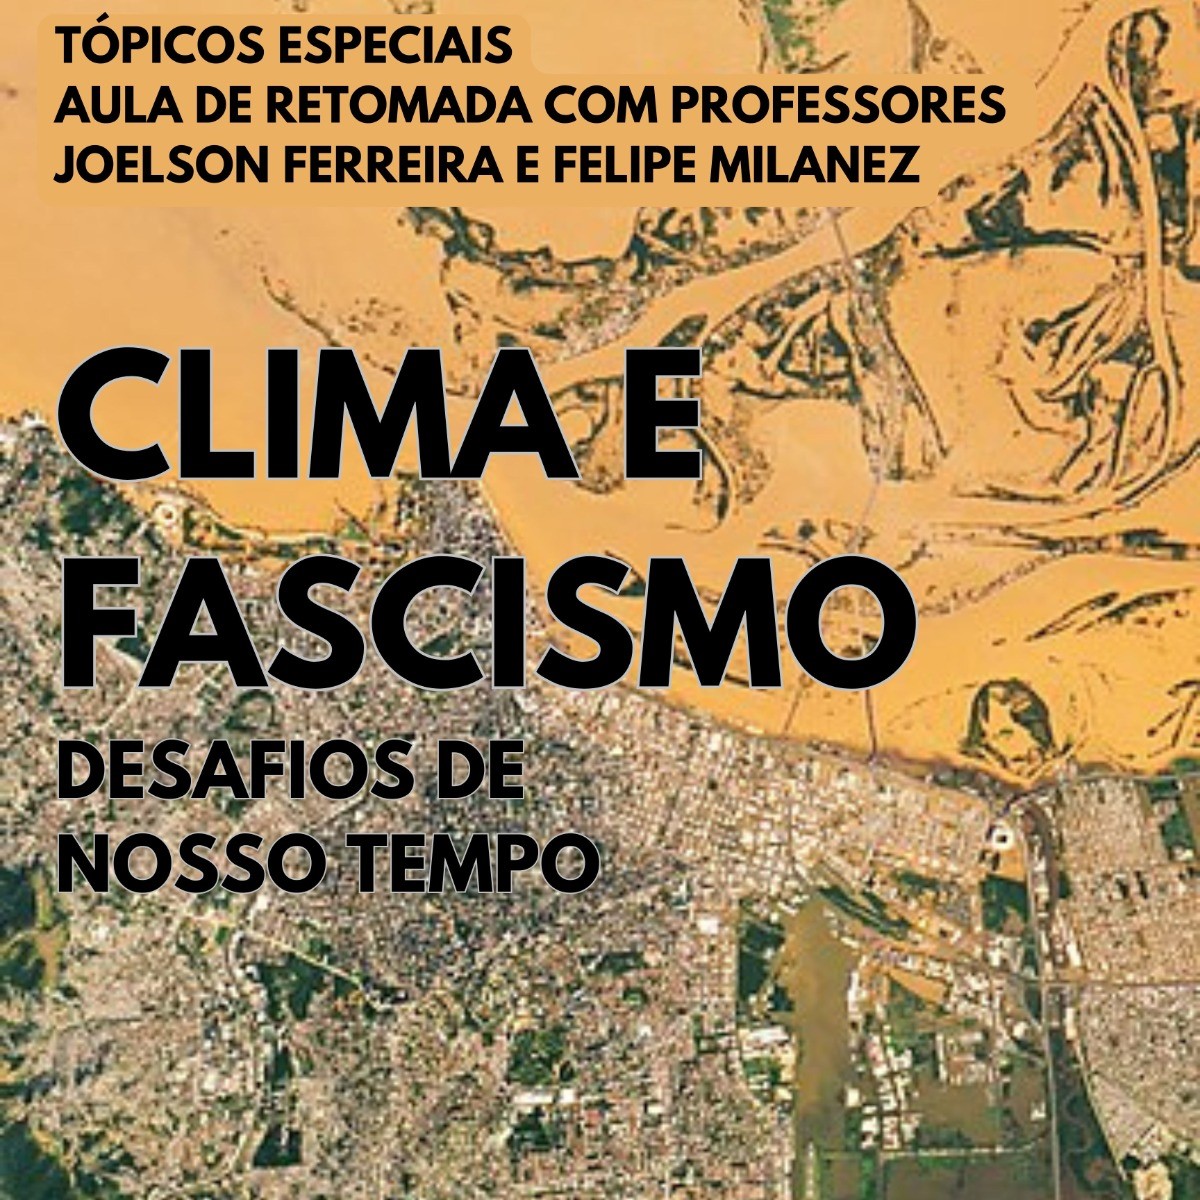 Professores Joelson Ferreira e Felipe Milanez ministram aula na UFBA sobre clima e fascismo